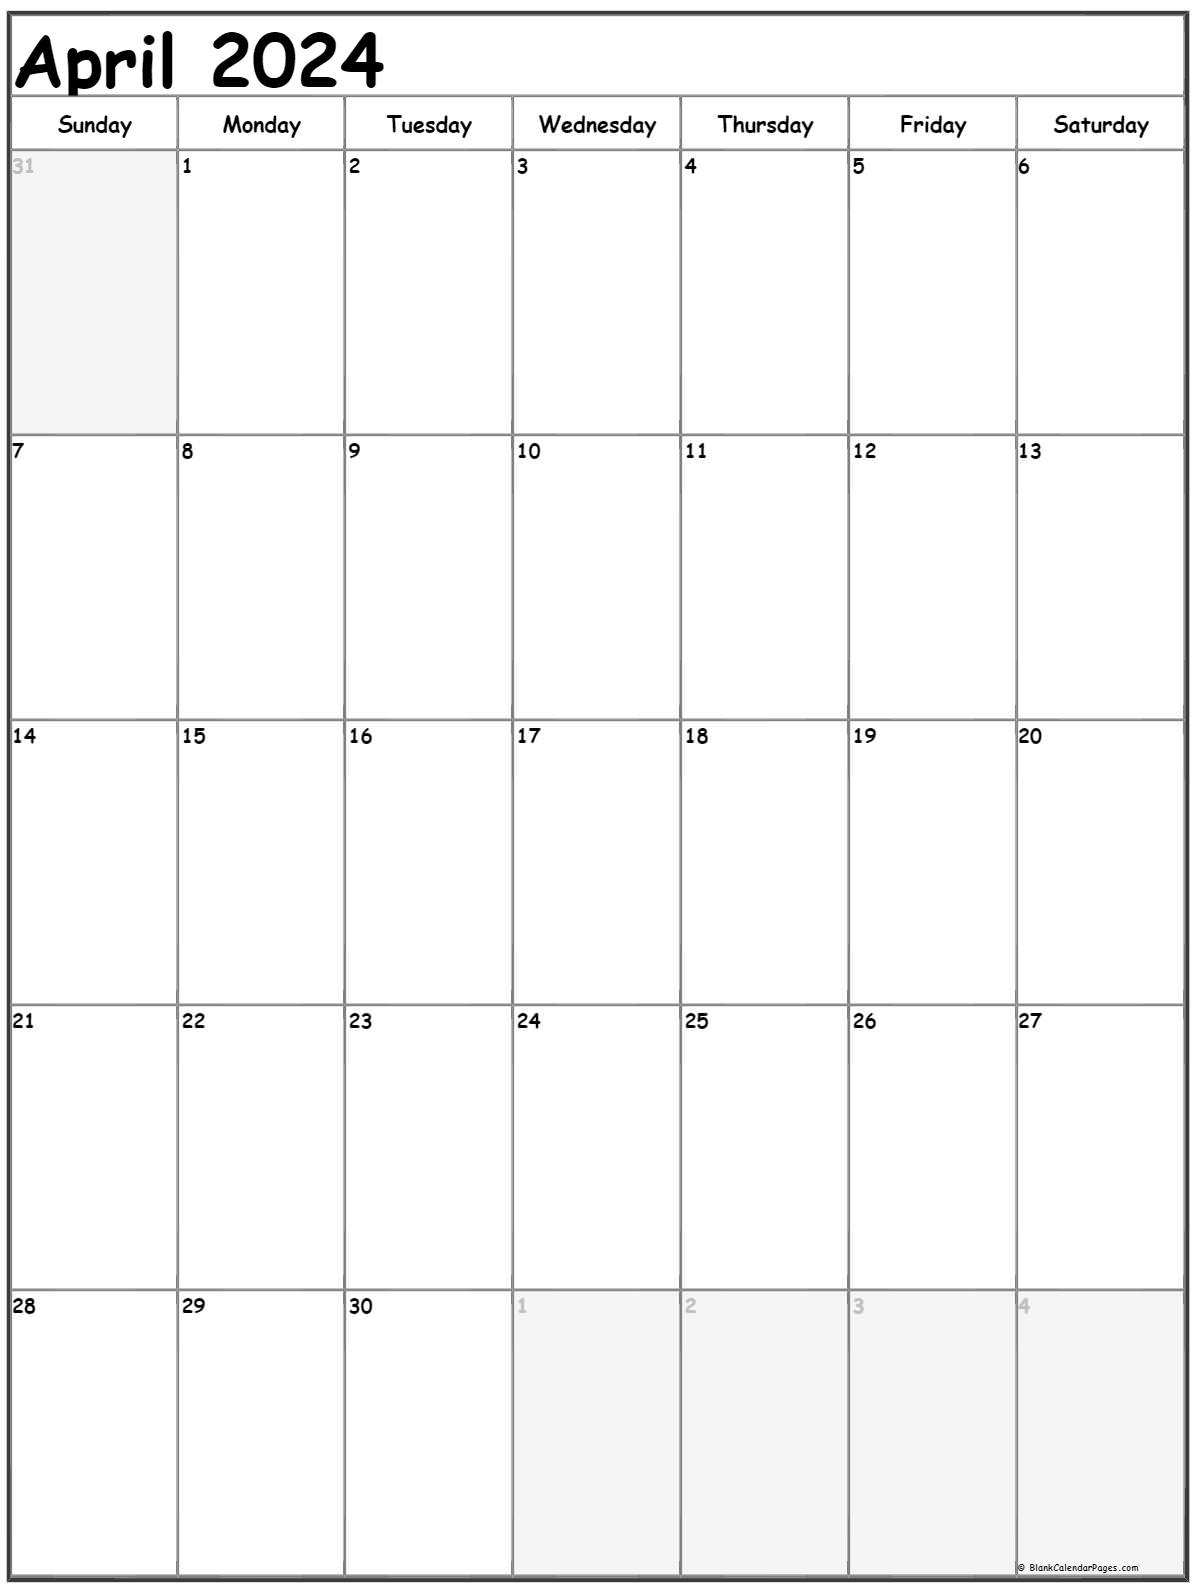 april-and-may-2024-calendar-calendar-quickly-april-2023-calendar